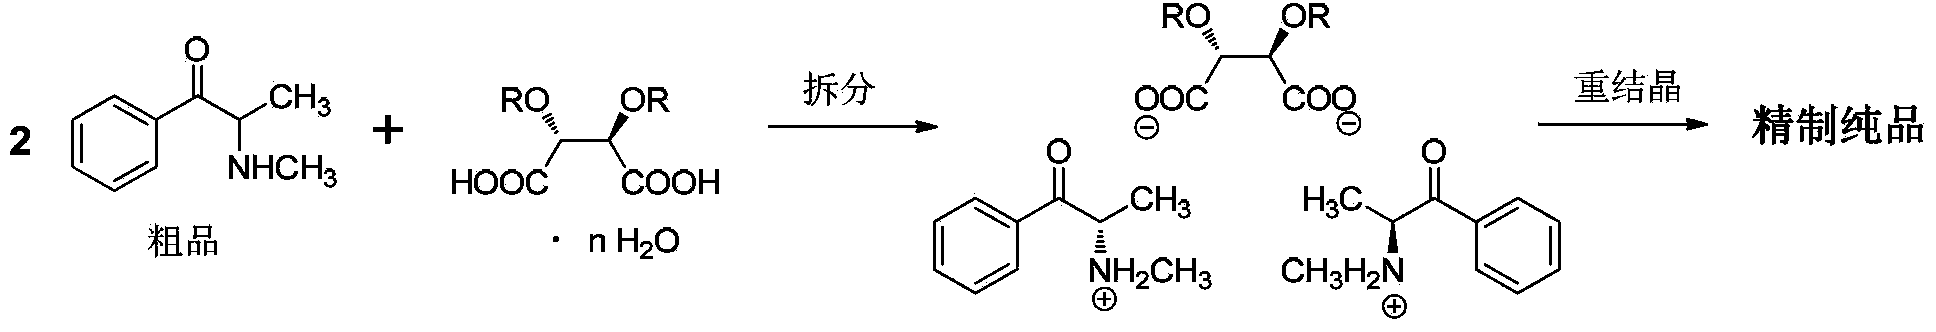 Preparation method for (S)-(-)-alpha-methylaminopropiophenone